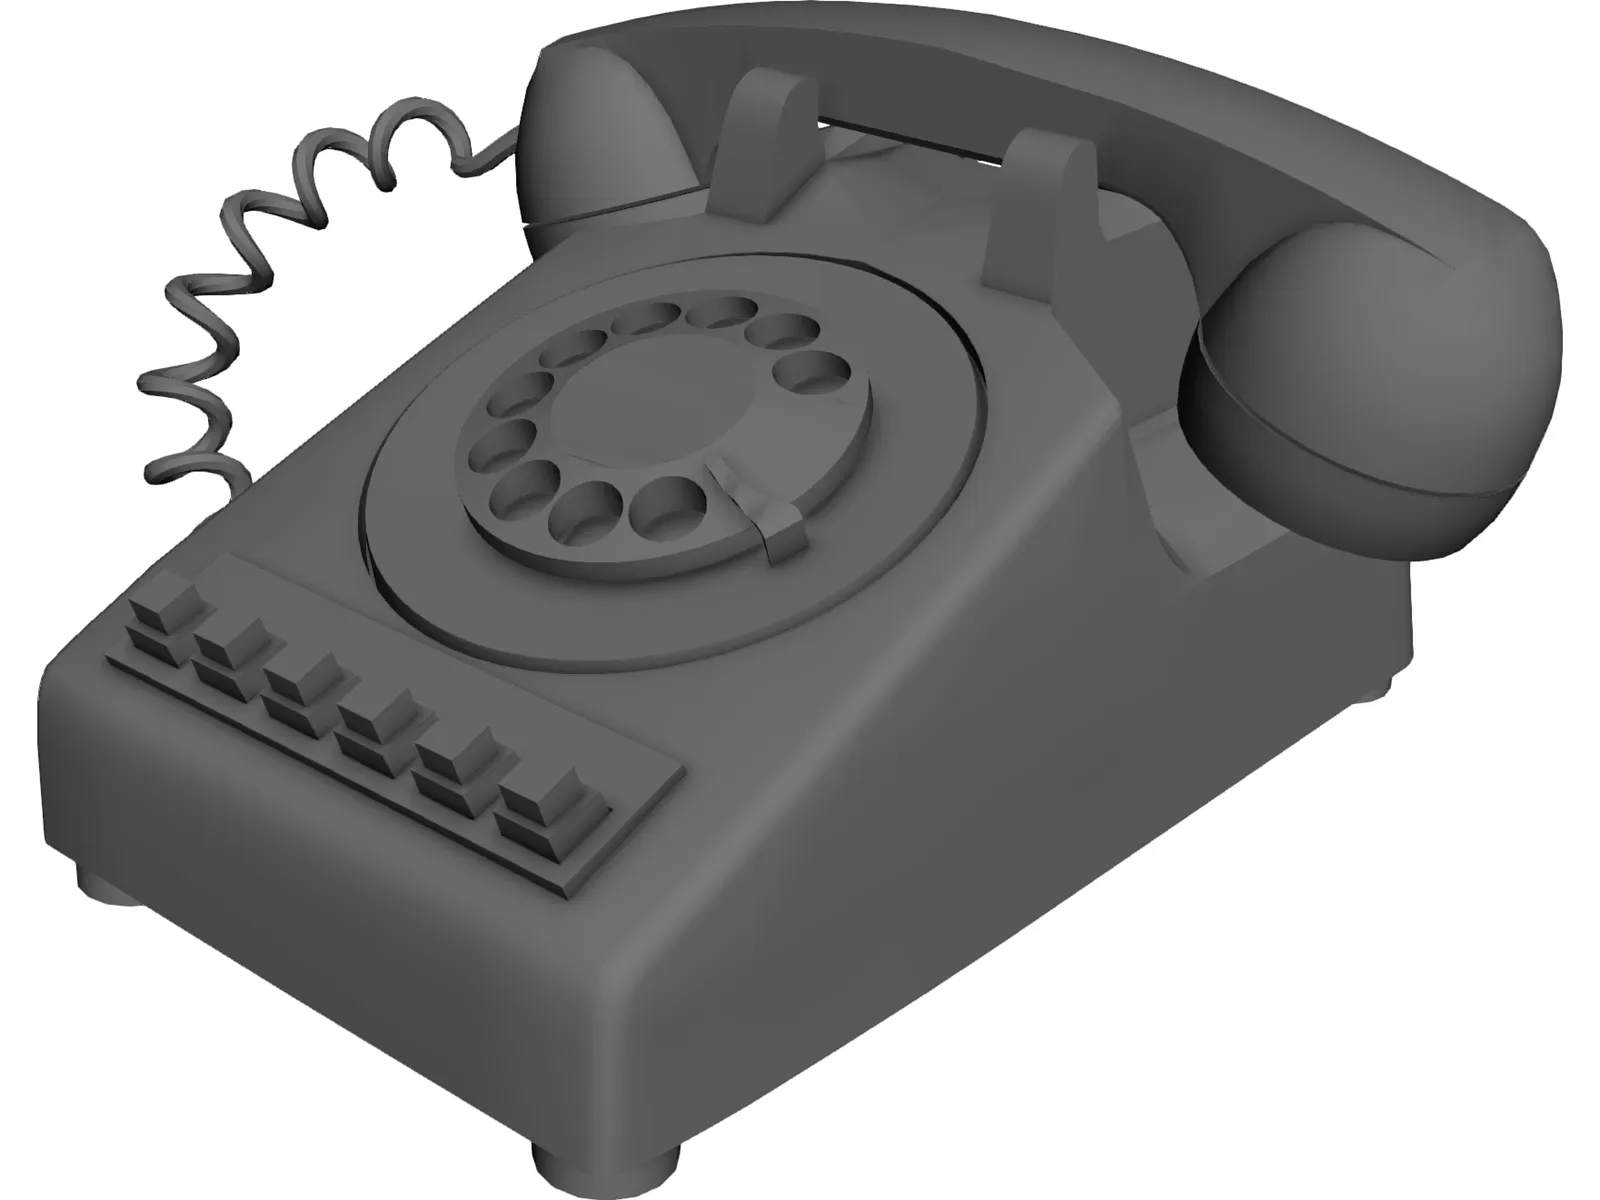 Telephone Rotary Office 3D Model